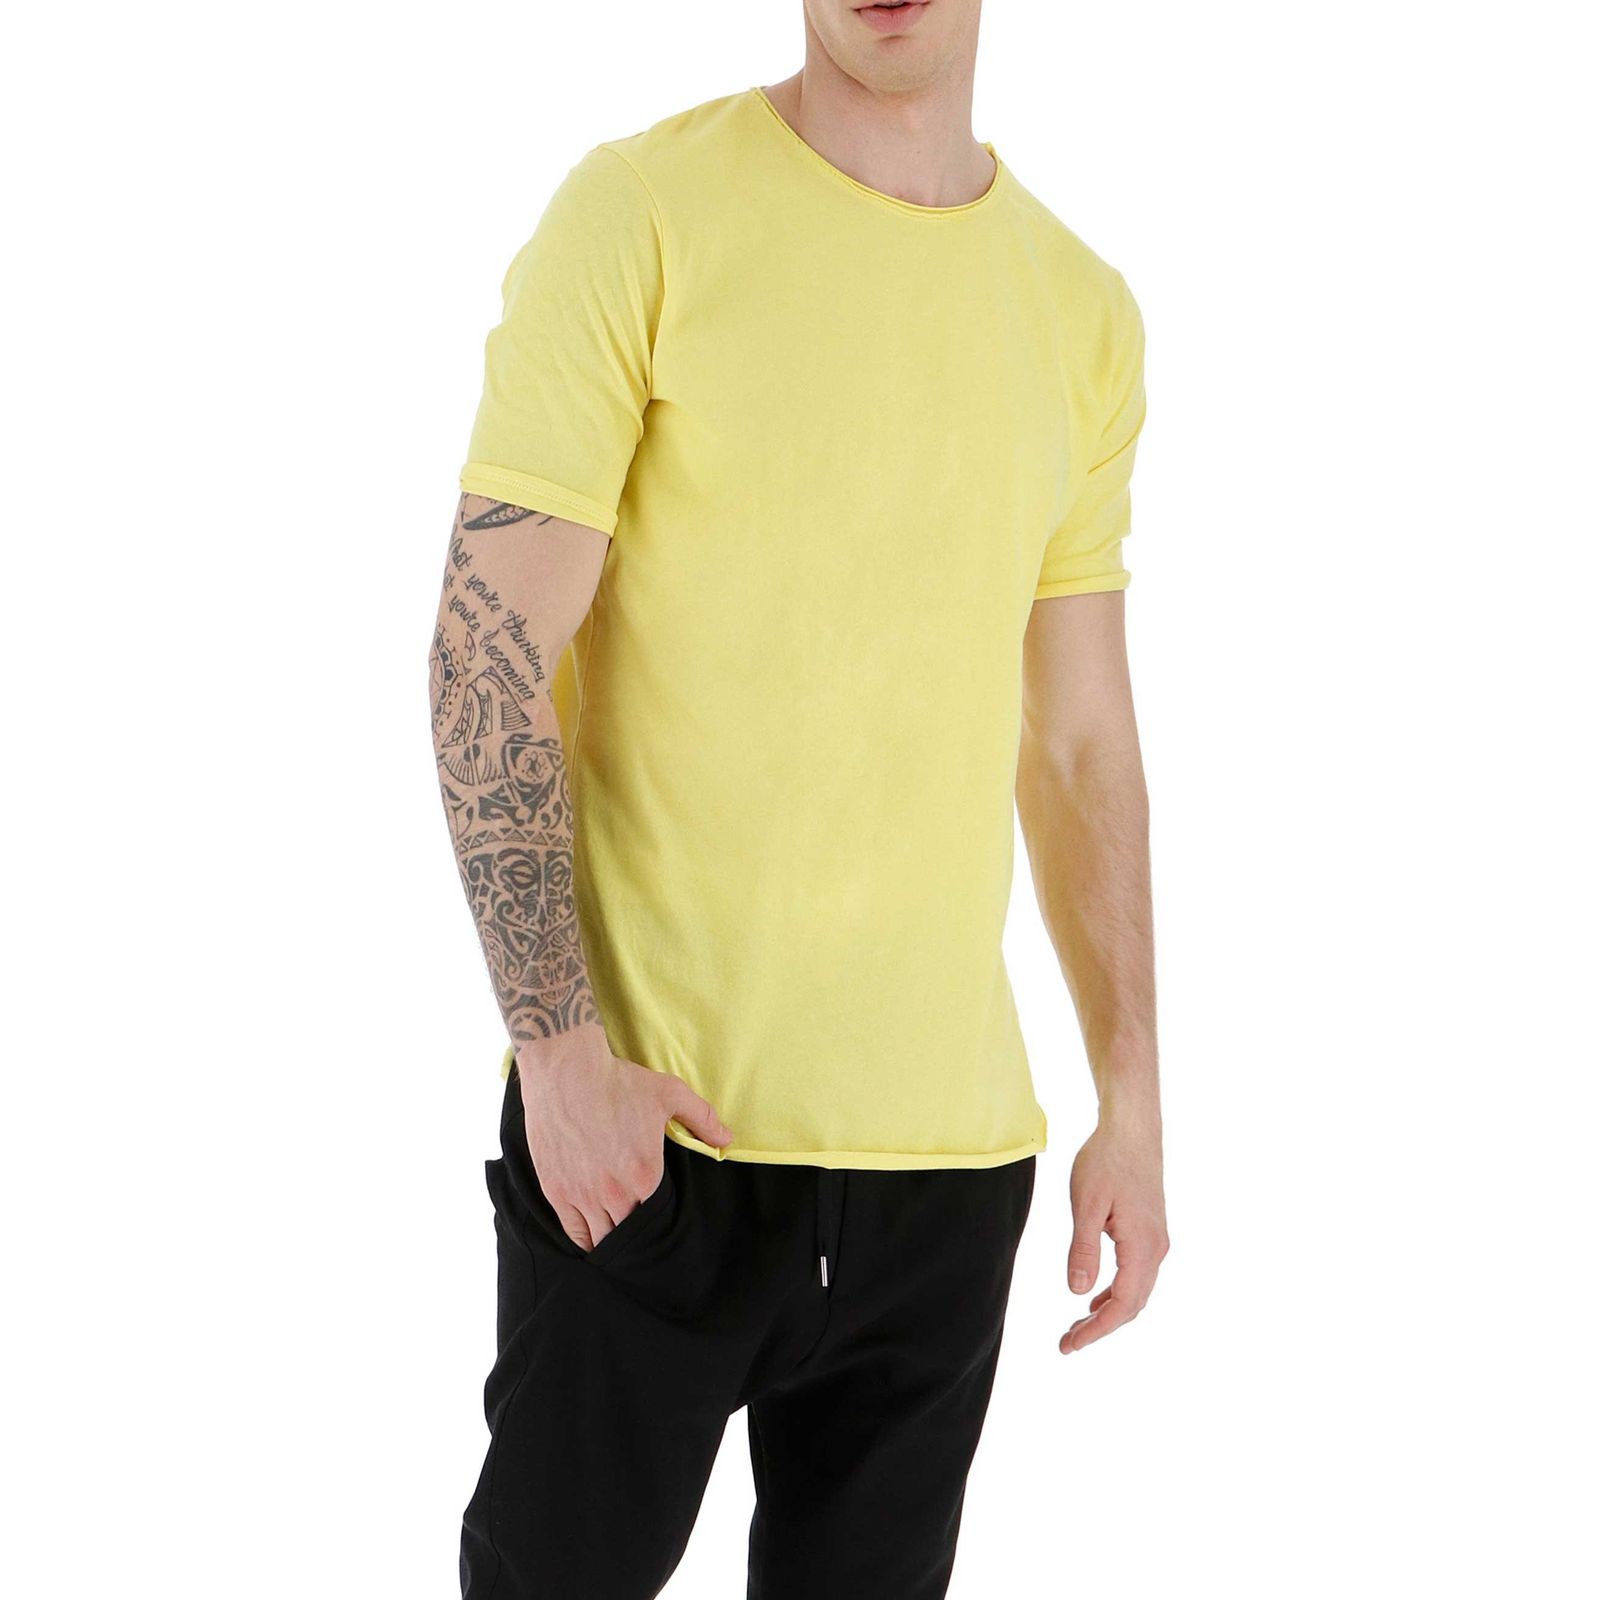 تی شرت نخی یقه گرد مردانه - امپریال - زرد - 2